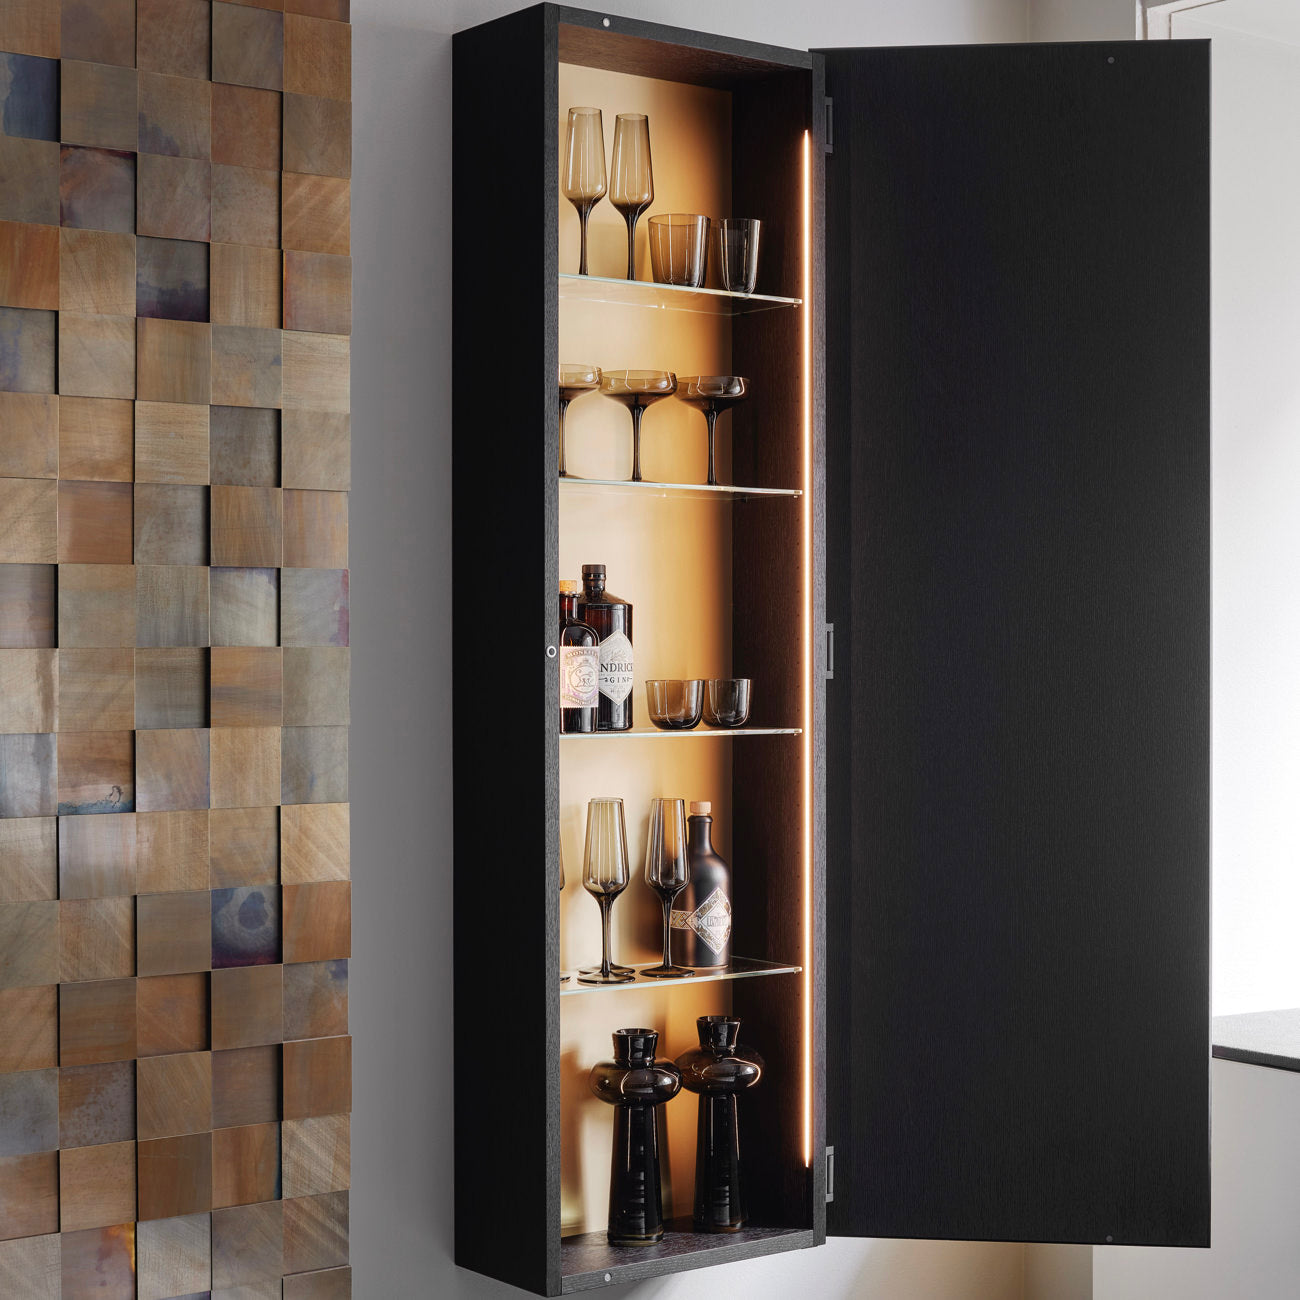 SHAPE 12 wall mounted cabinet - Christine Kröncke Interior Design